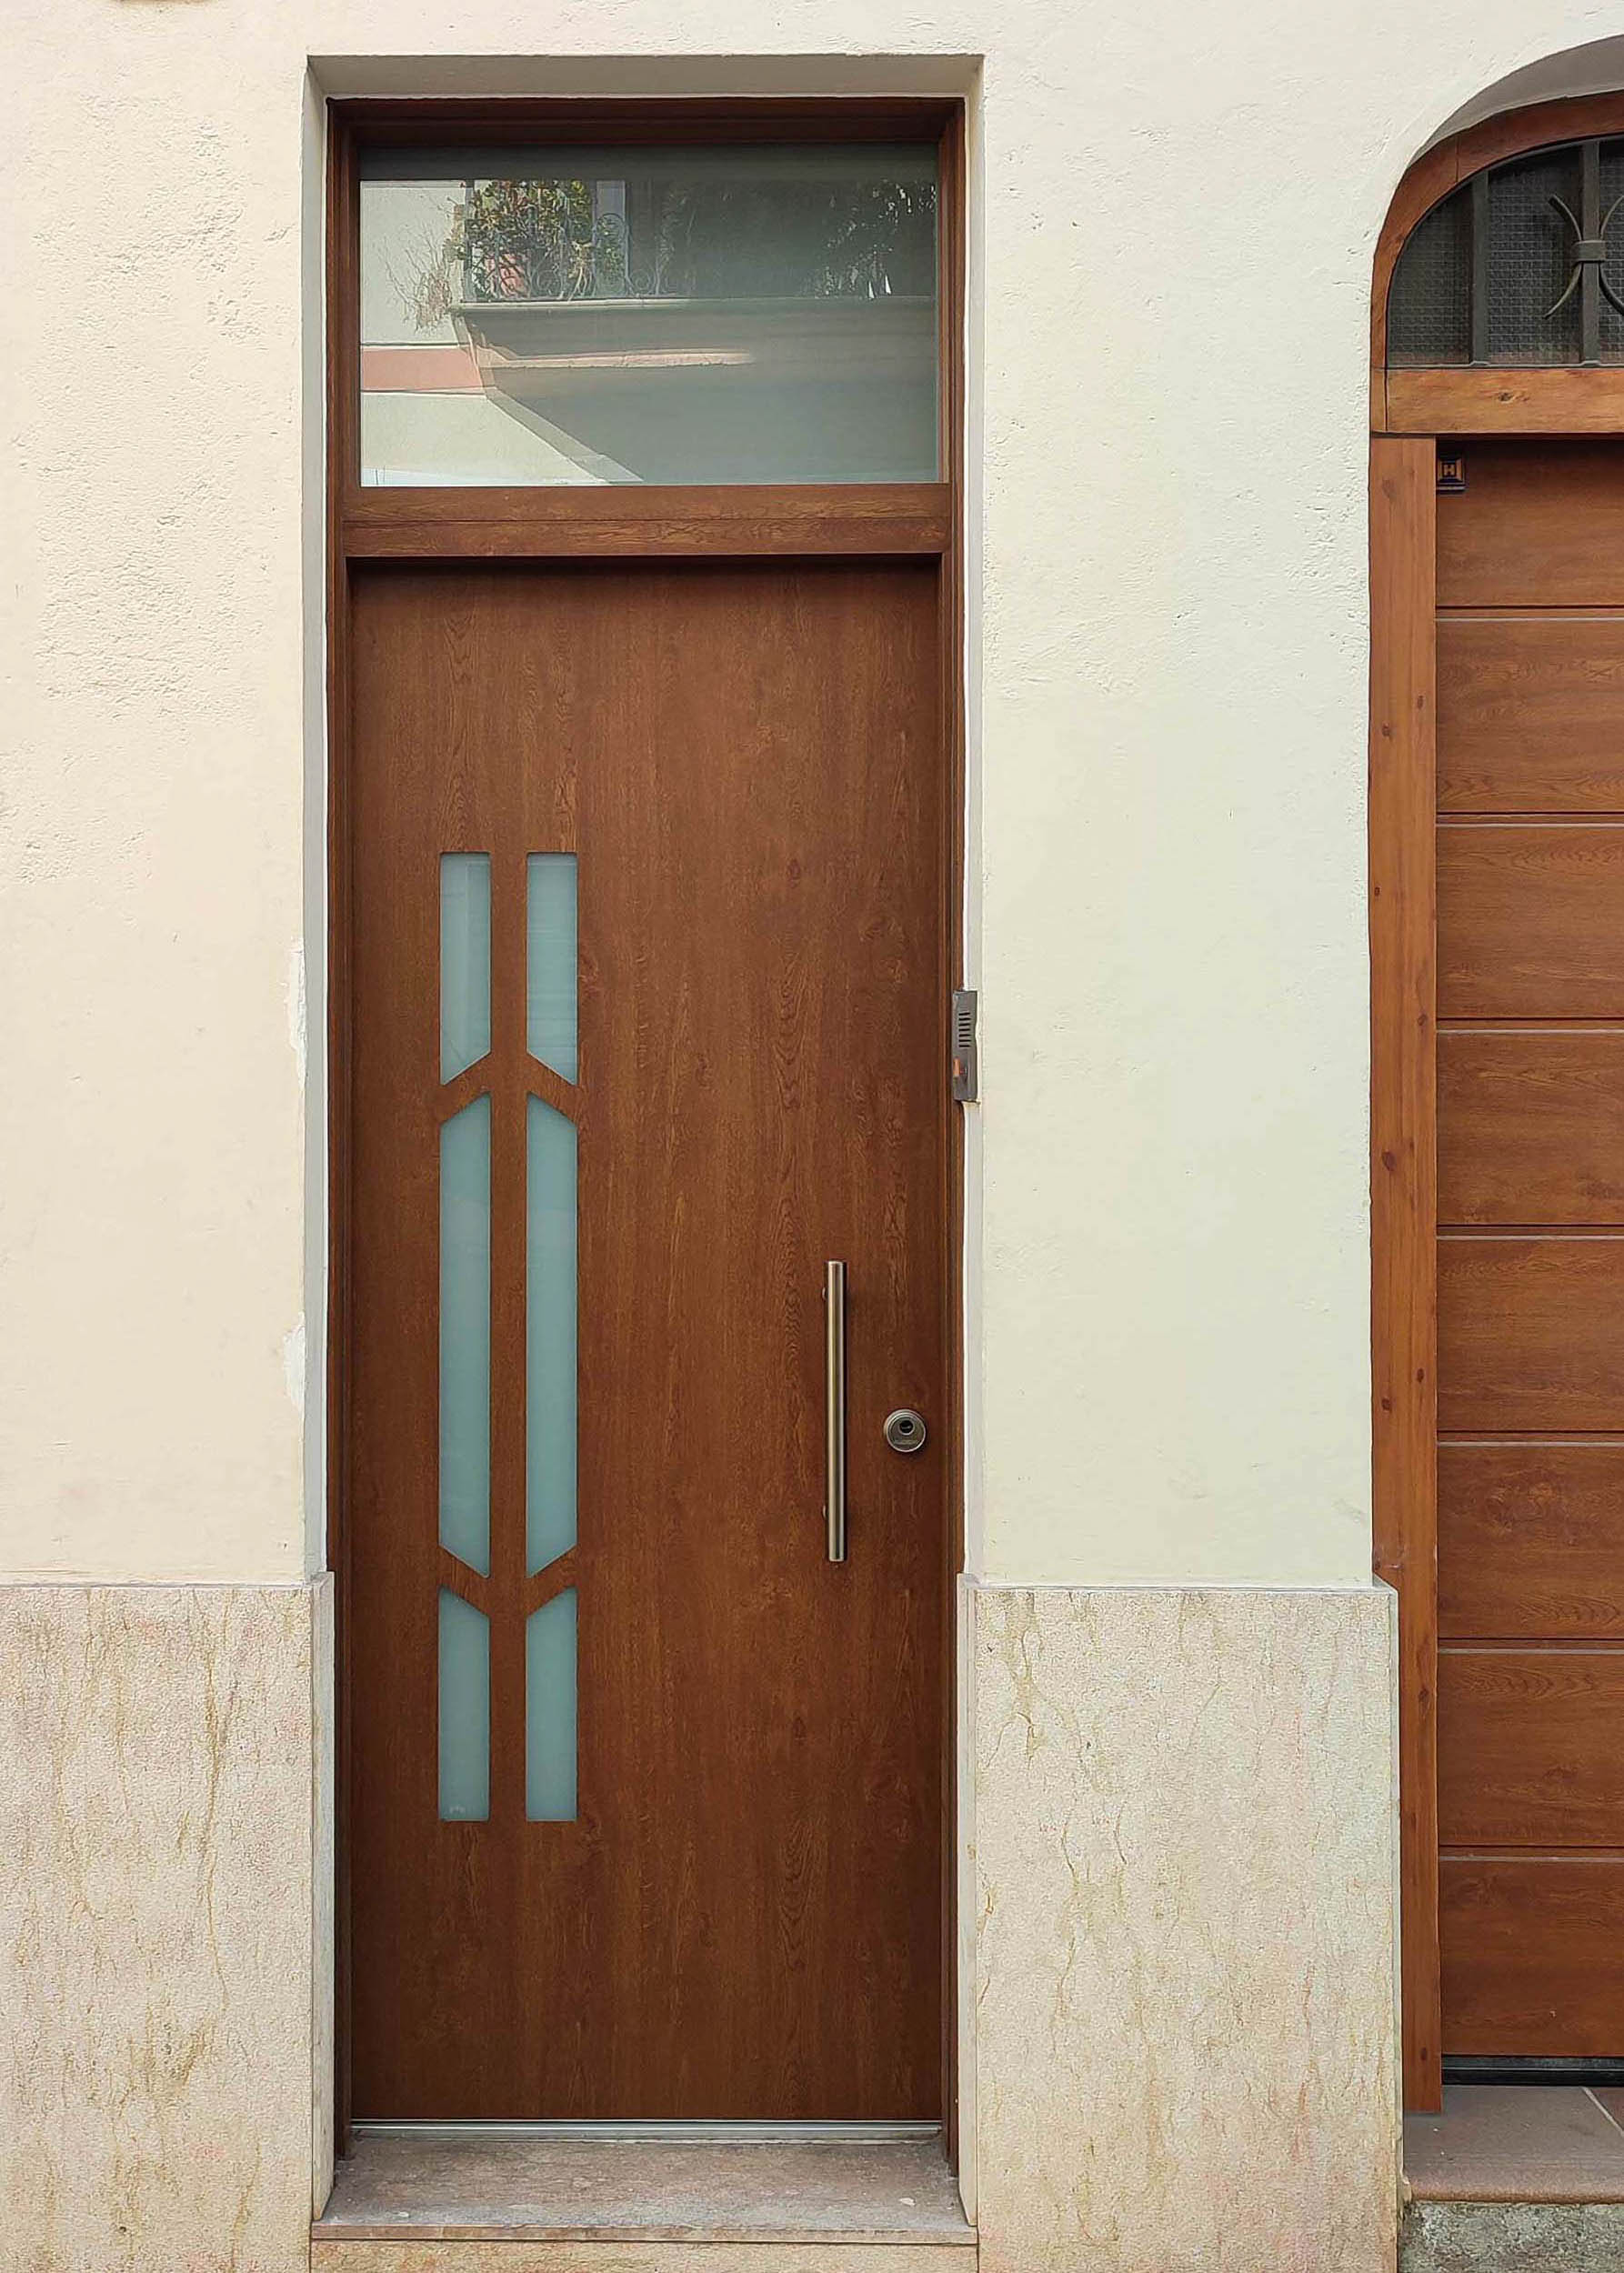 Duque Vientre taiko puerta Puerta exterior con vidrios decorativos - Puertas Interiores